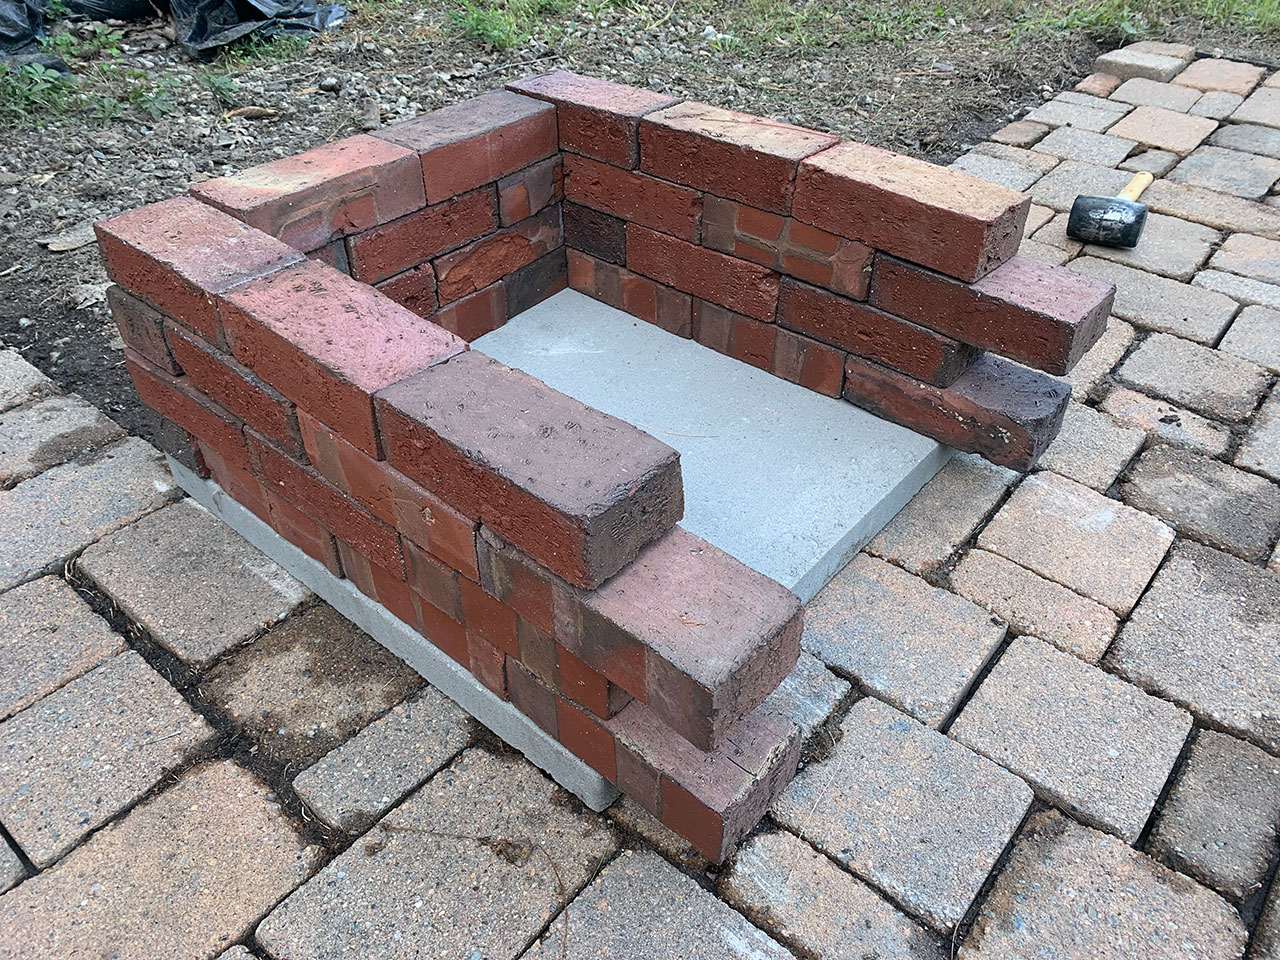 Four layer of bricks.